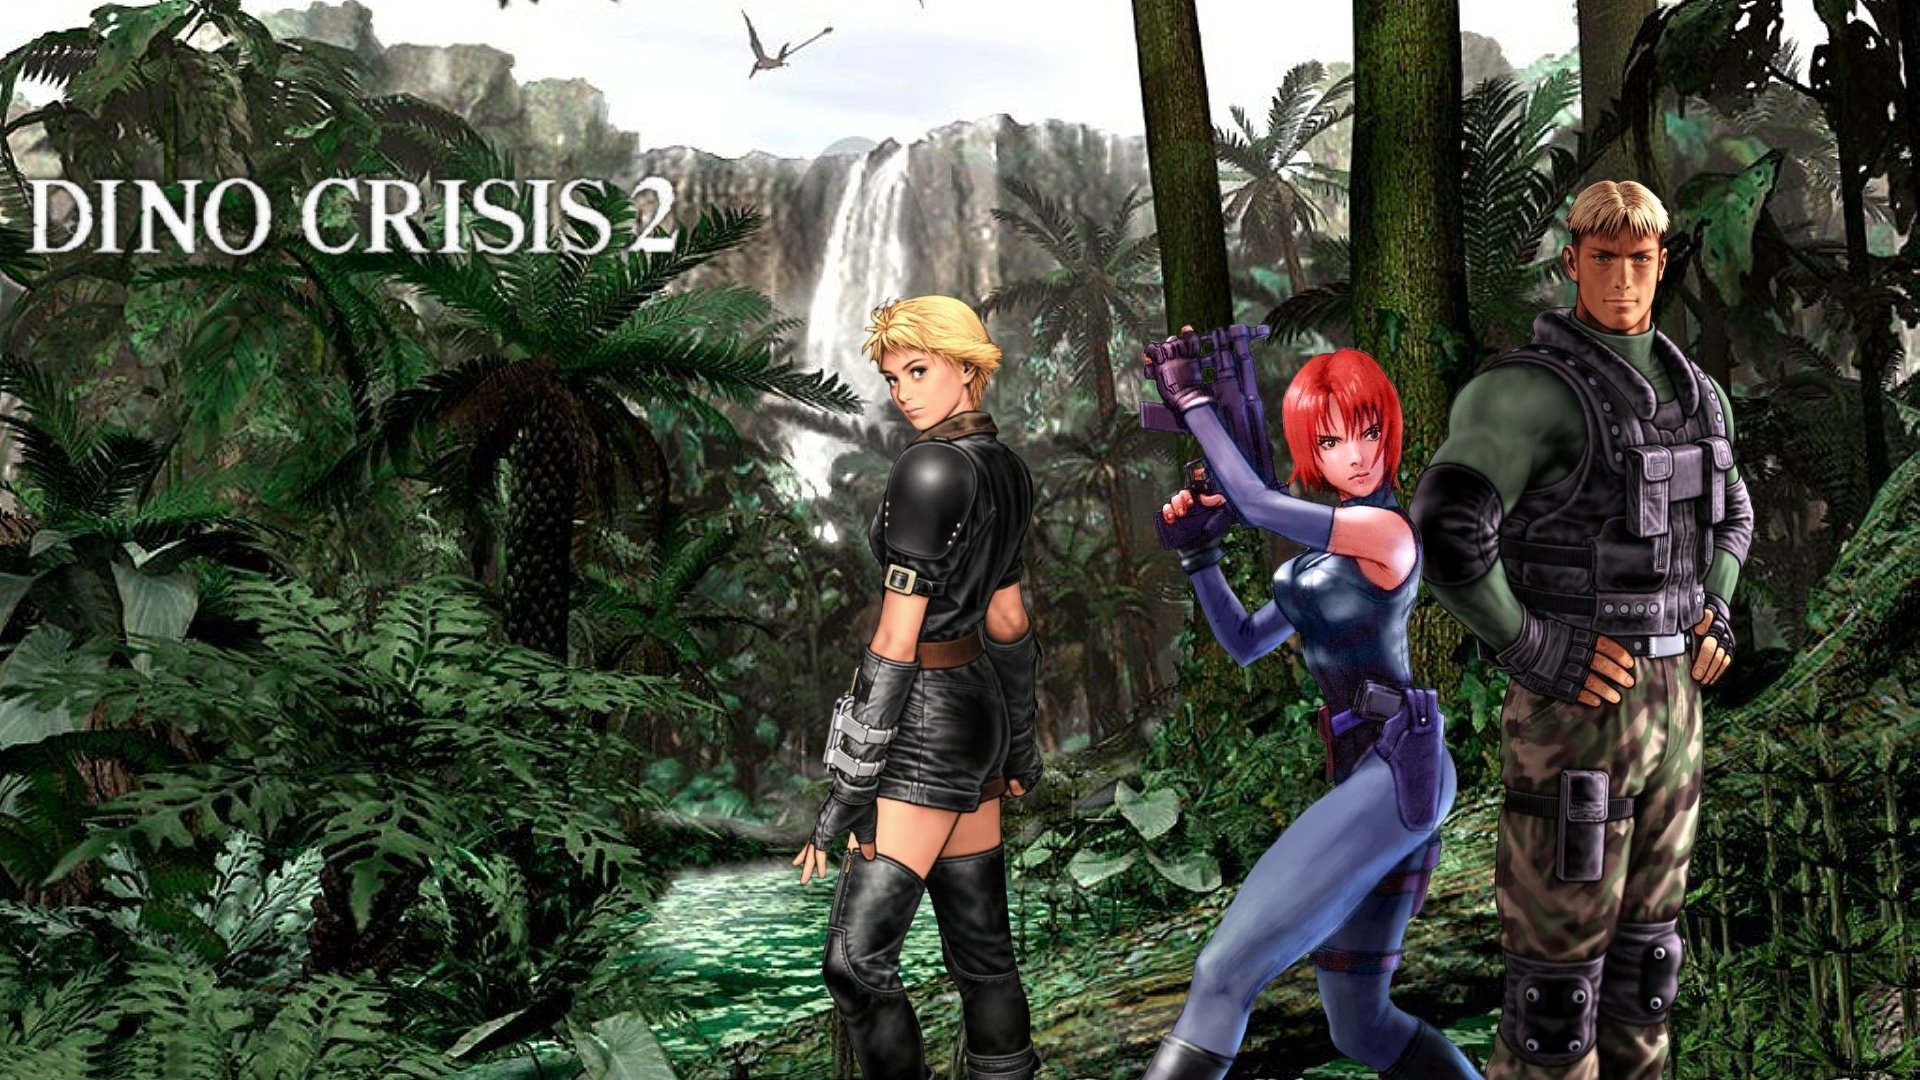 Dino crisis 2 обзор игры PS1. 